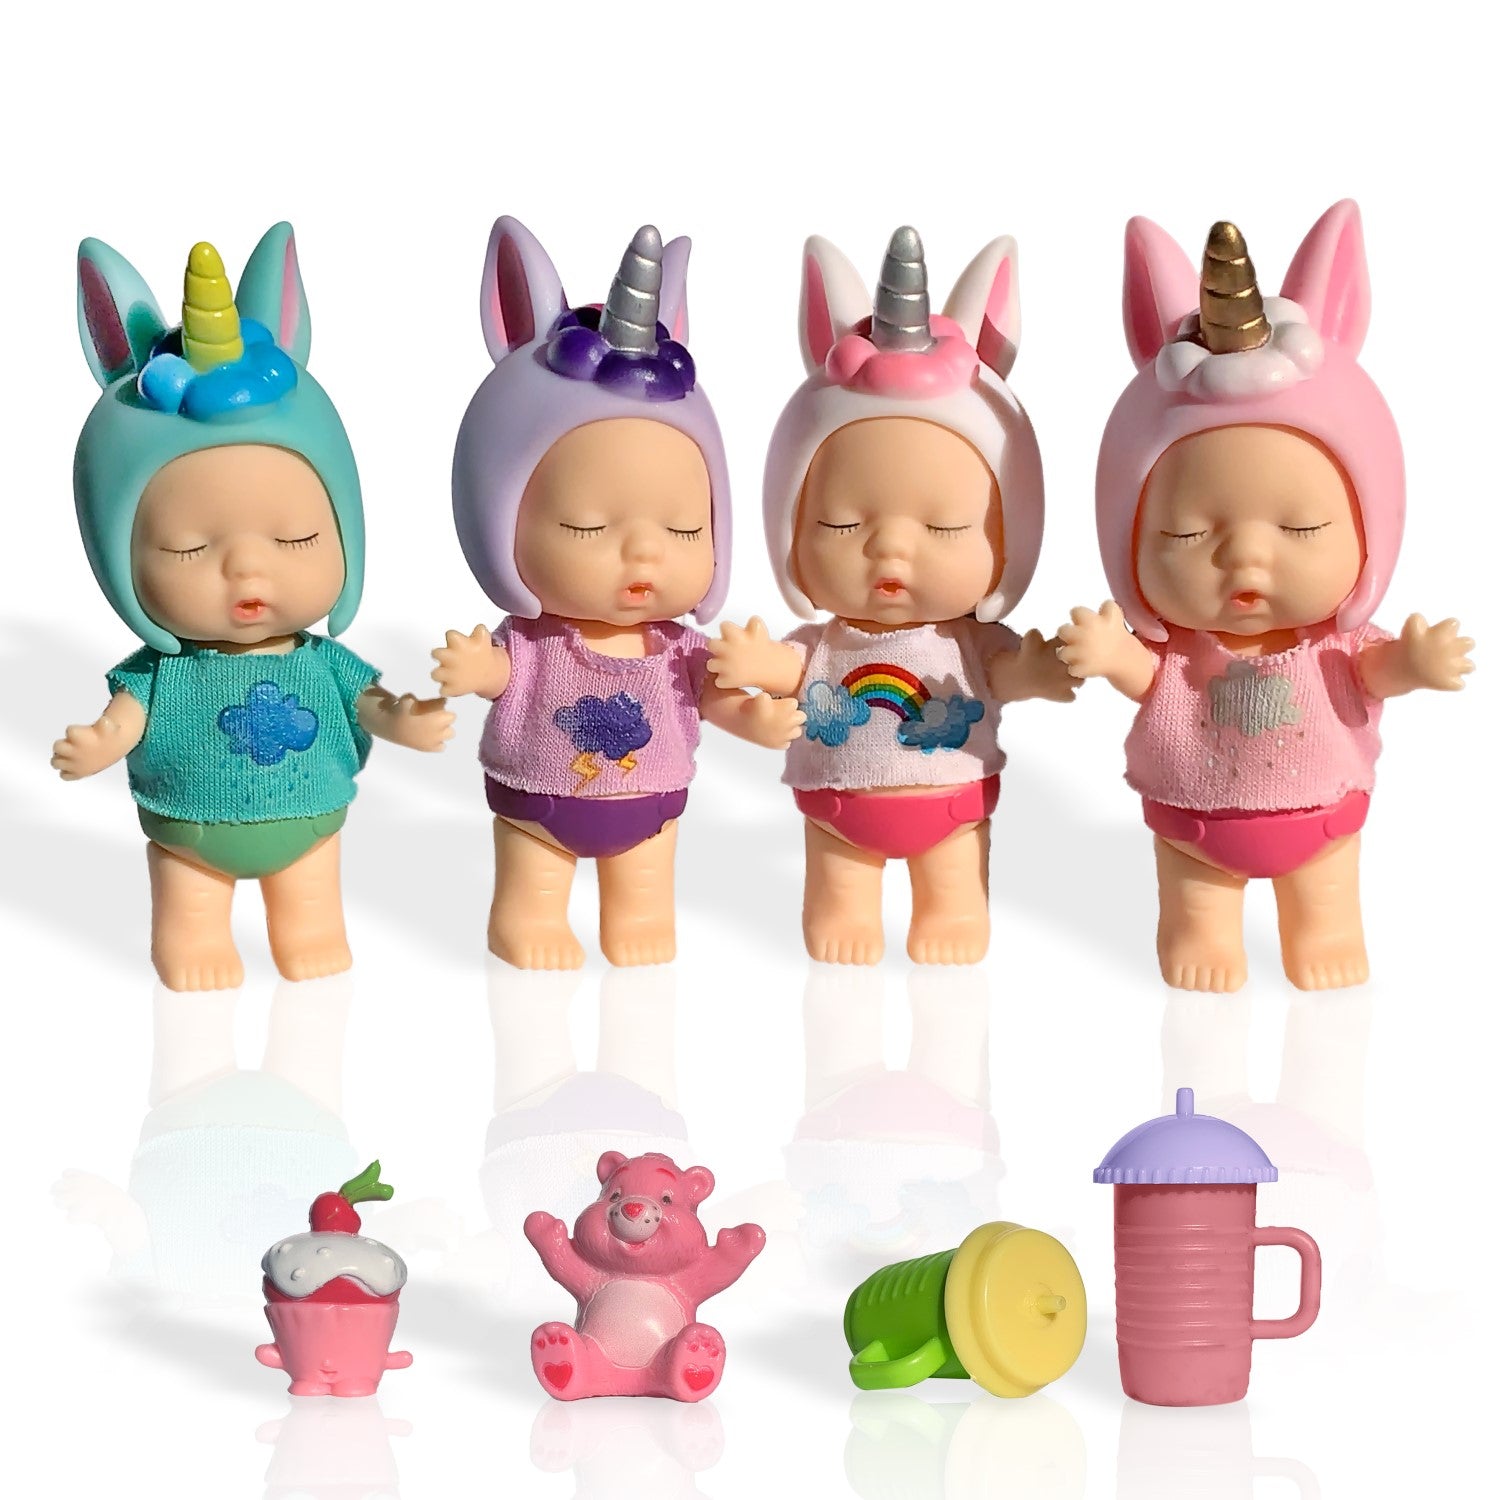 .com: toys for girls 8-10 dolls baby alive  Unicorn toys, Unicorn  stuffed animal, Pink backpack